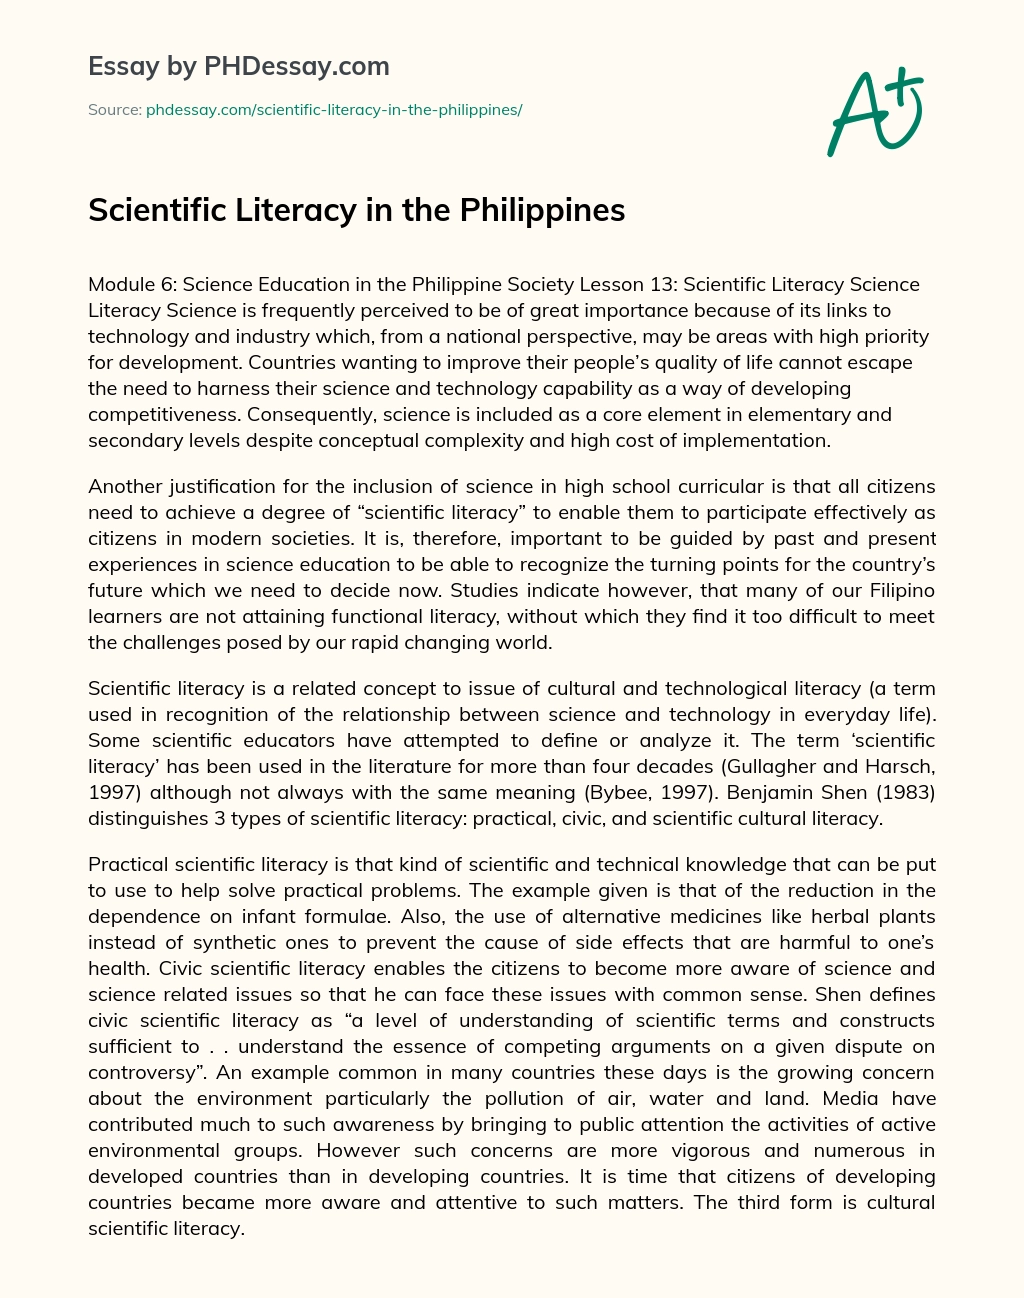 Scientific Literacy in the Philippines essay